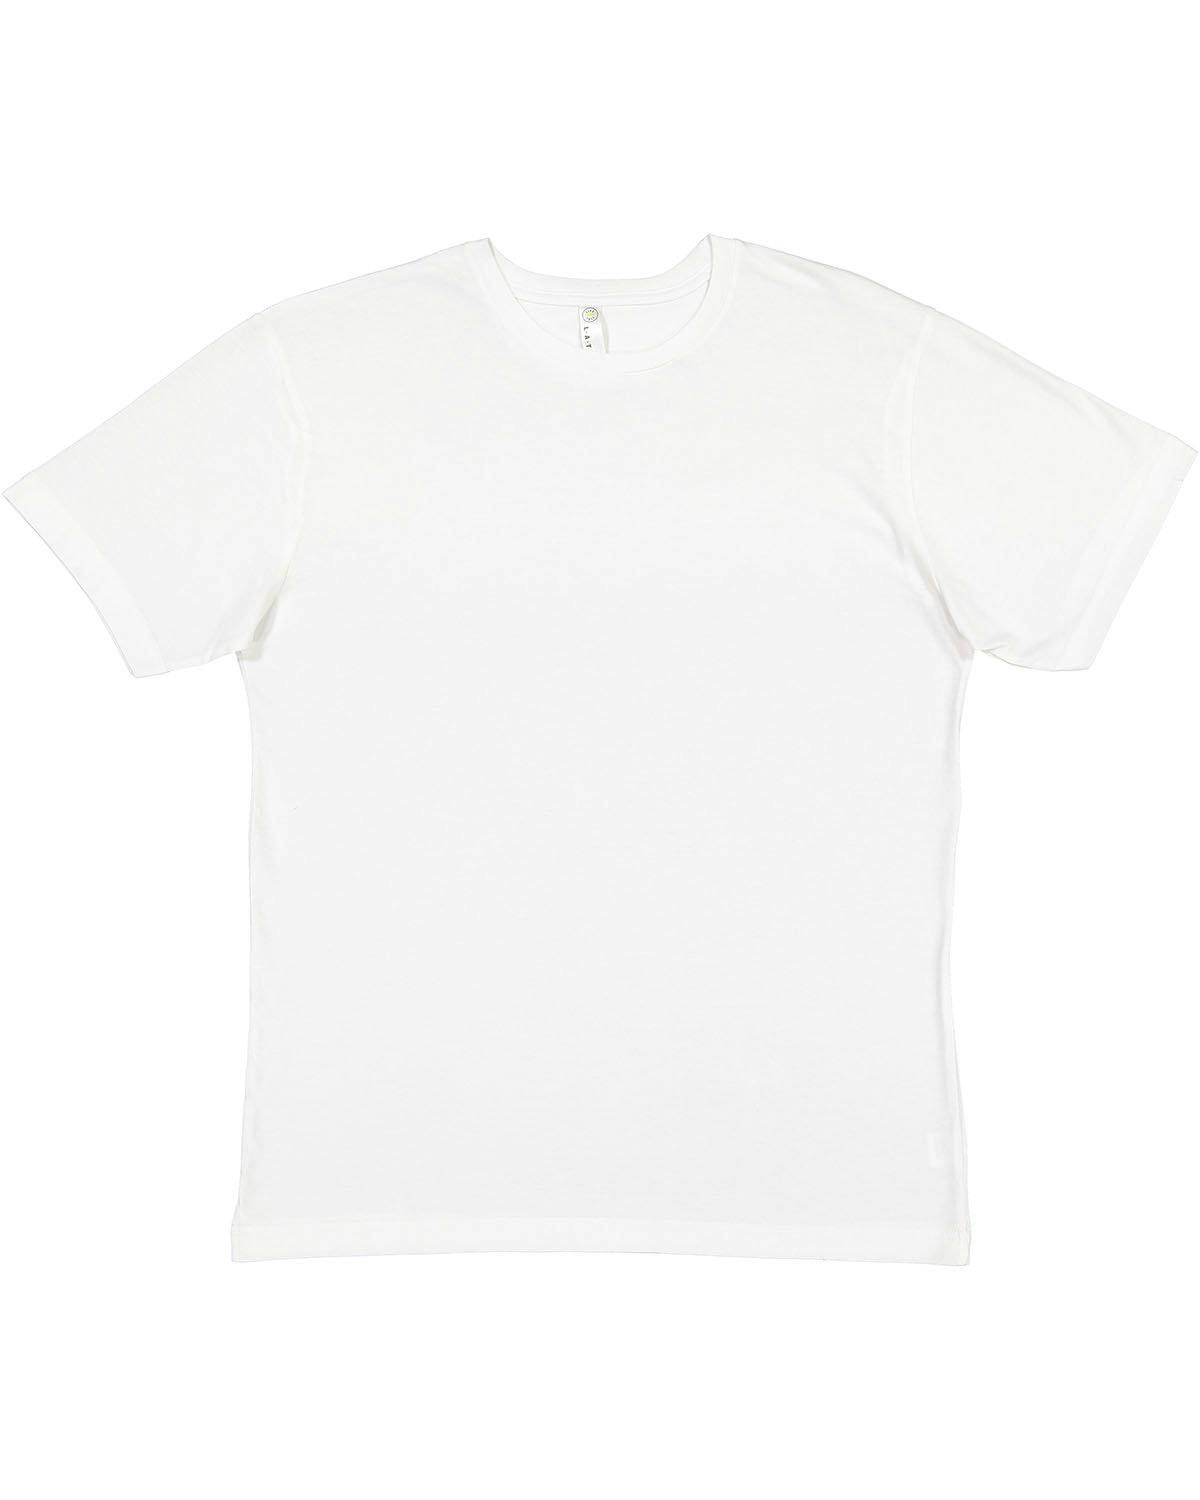 Image for Men's Fine Jersey T-Shirt